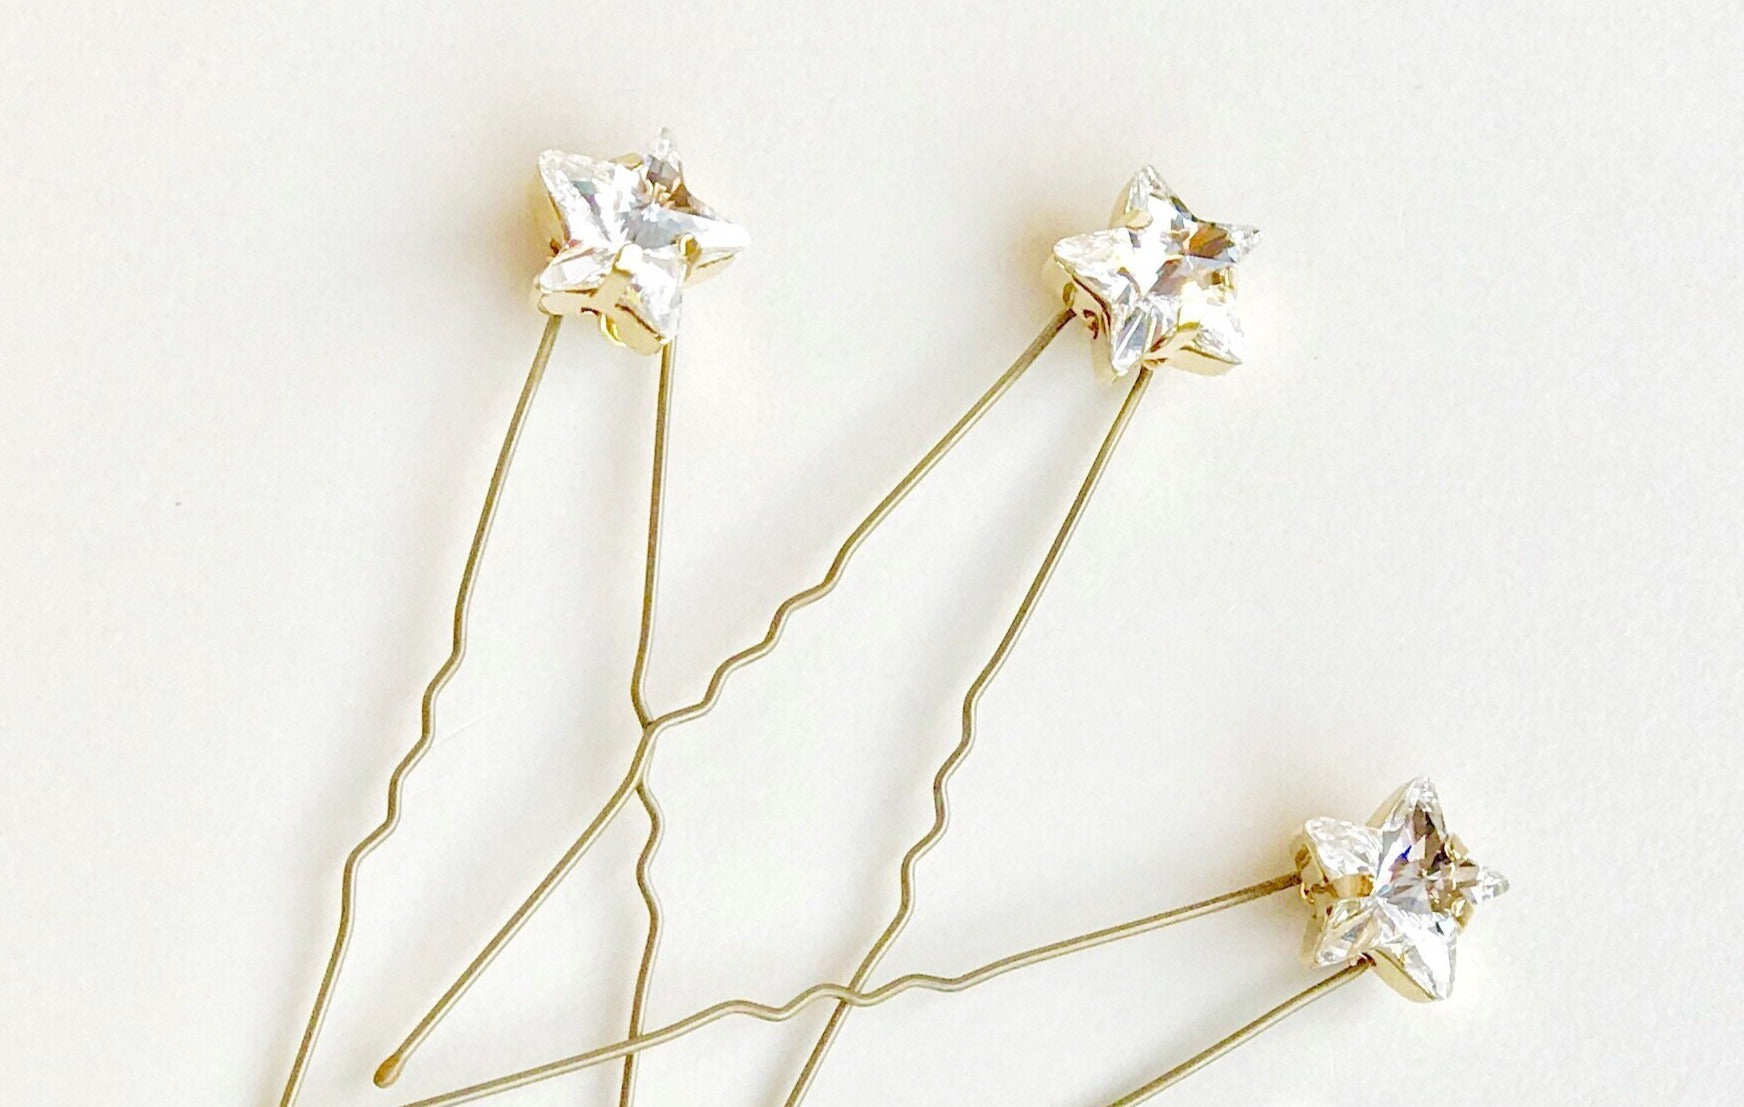 Star Swarovksi crystal hair pins in gold - Star